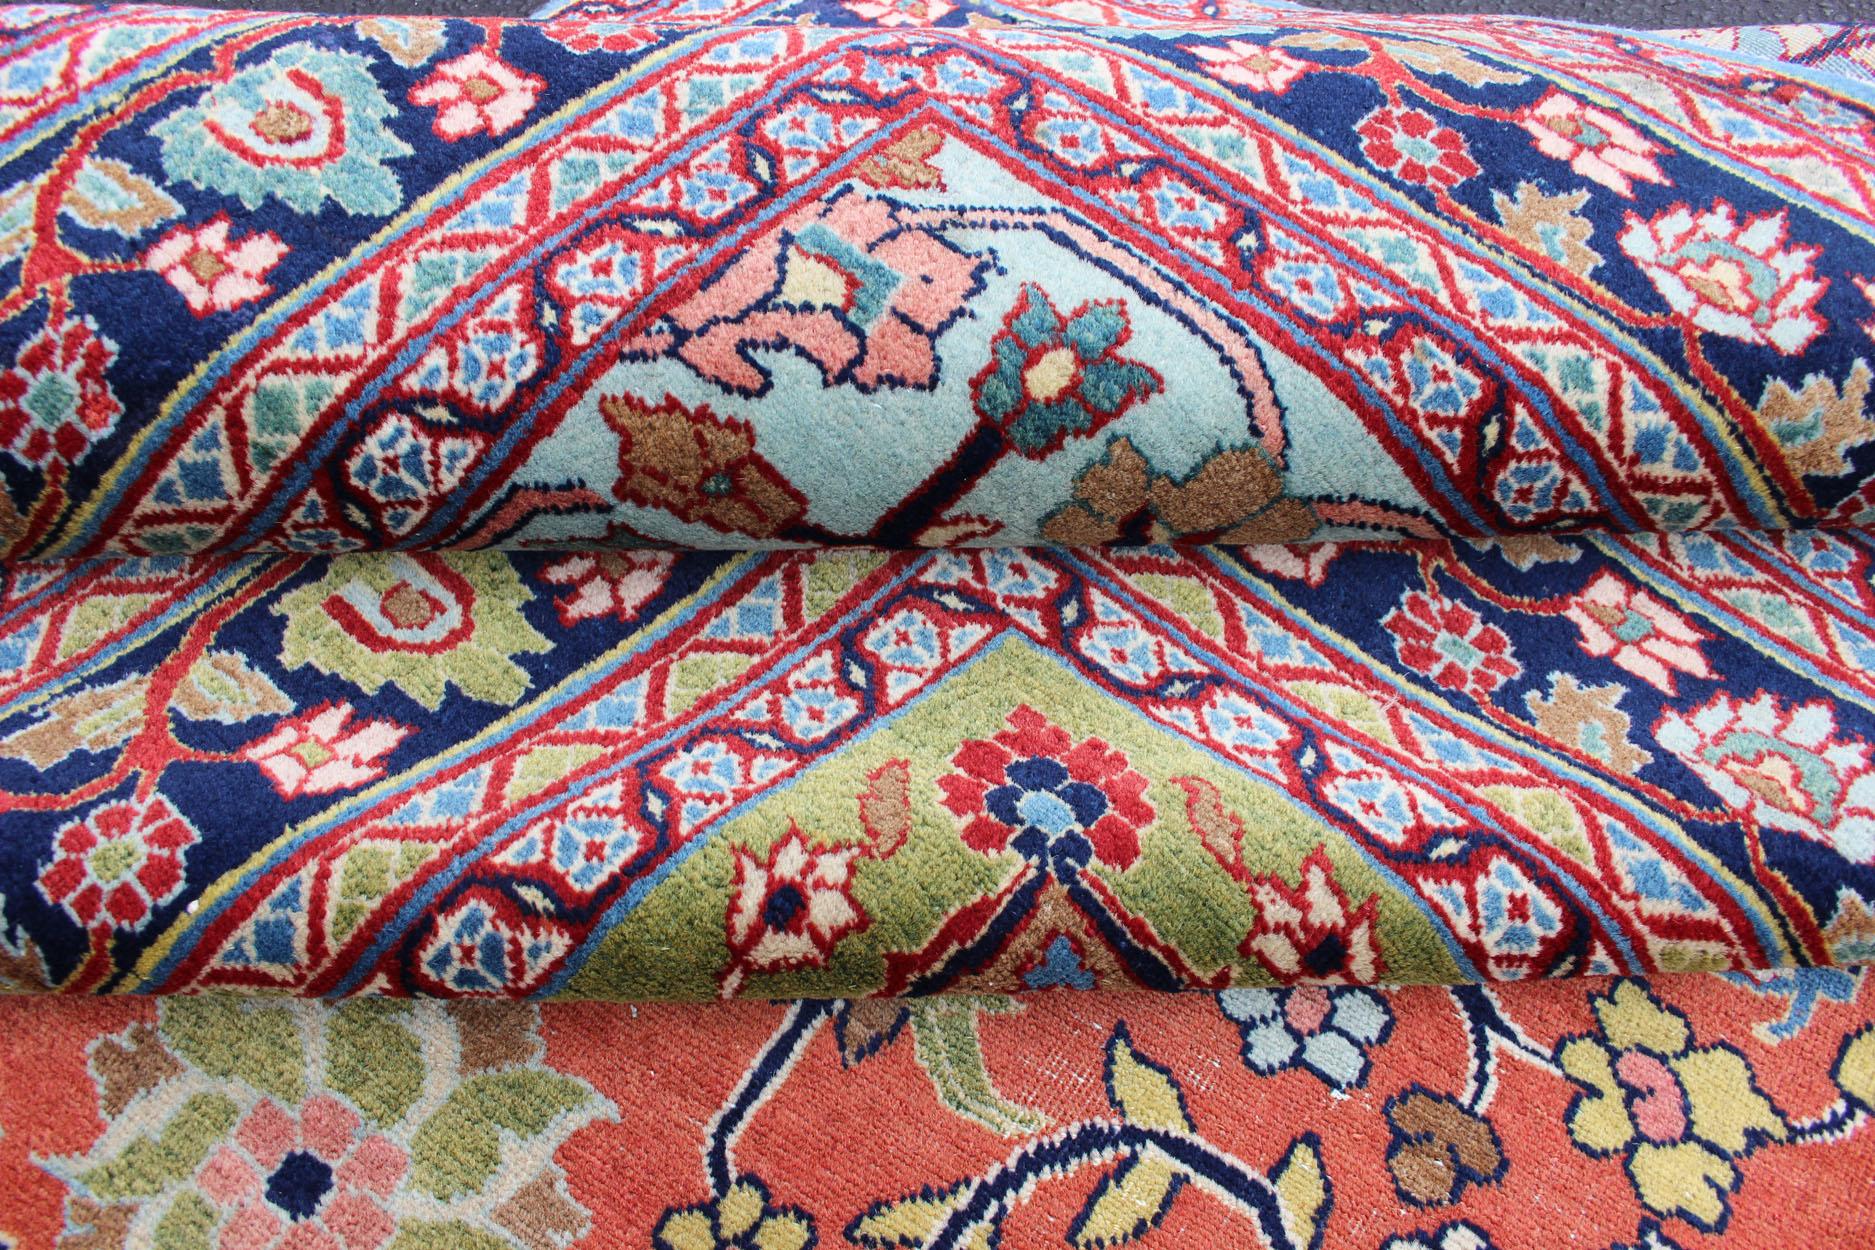 Wool Antique Fine Persian Classic Design Tabriz Rug in Orange, Blue & Multi Colors For Sale